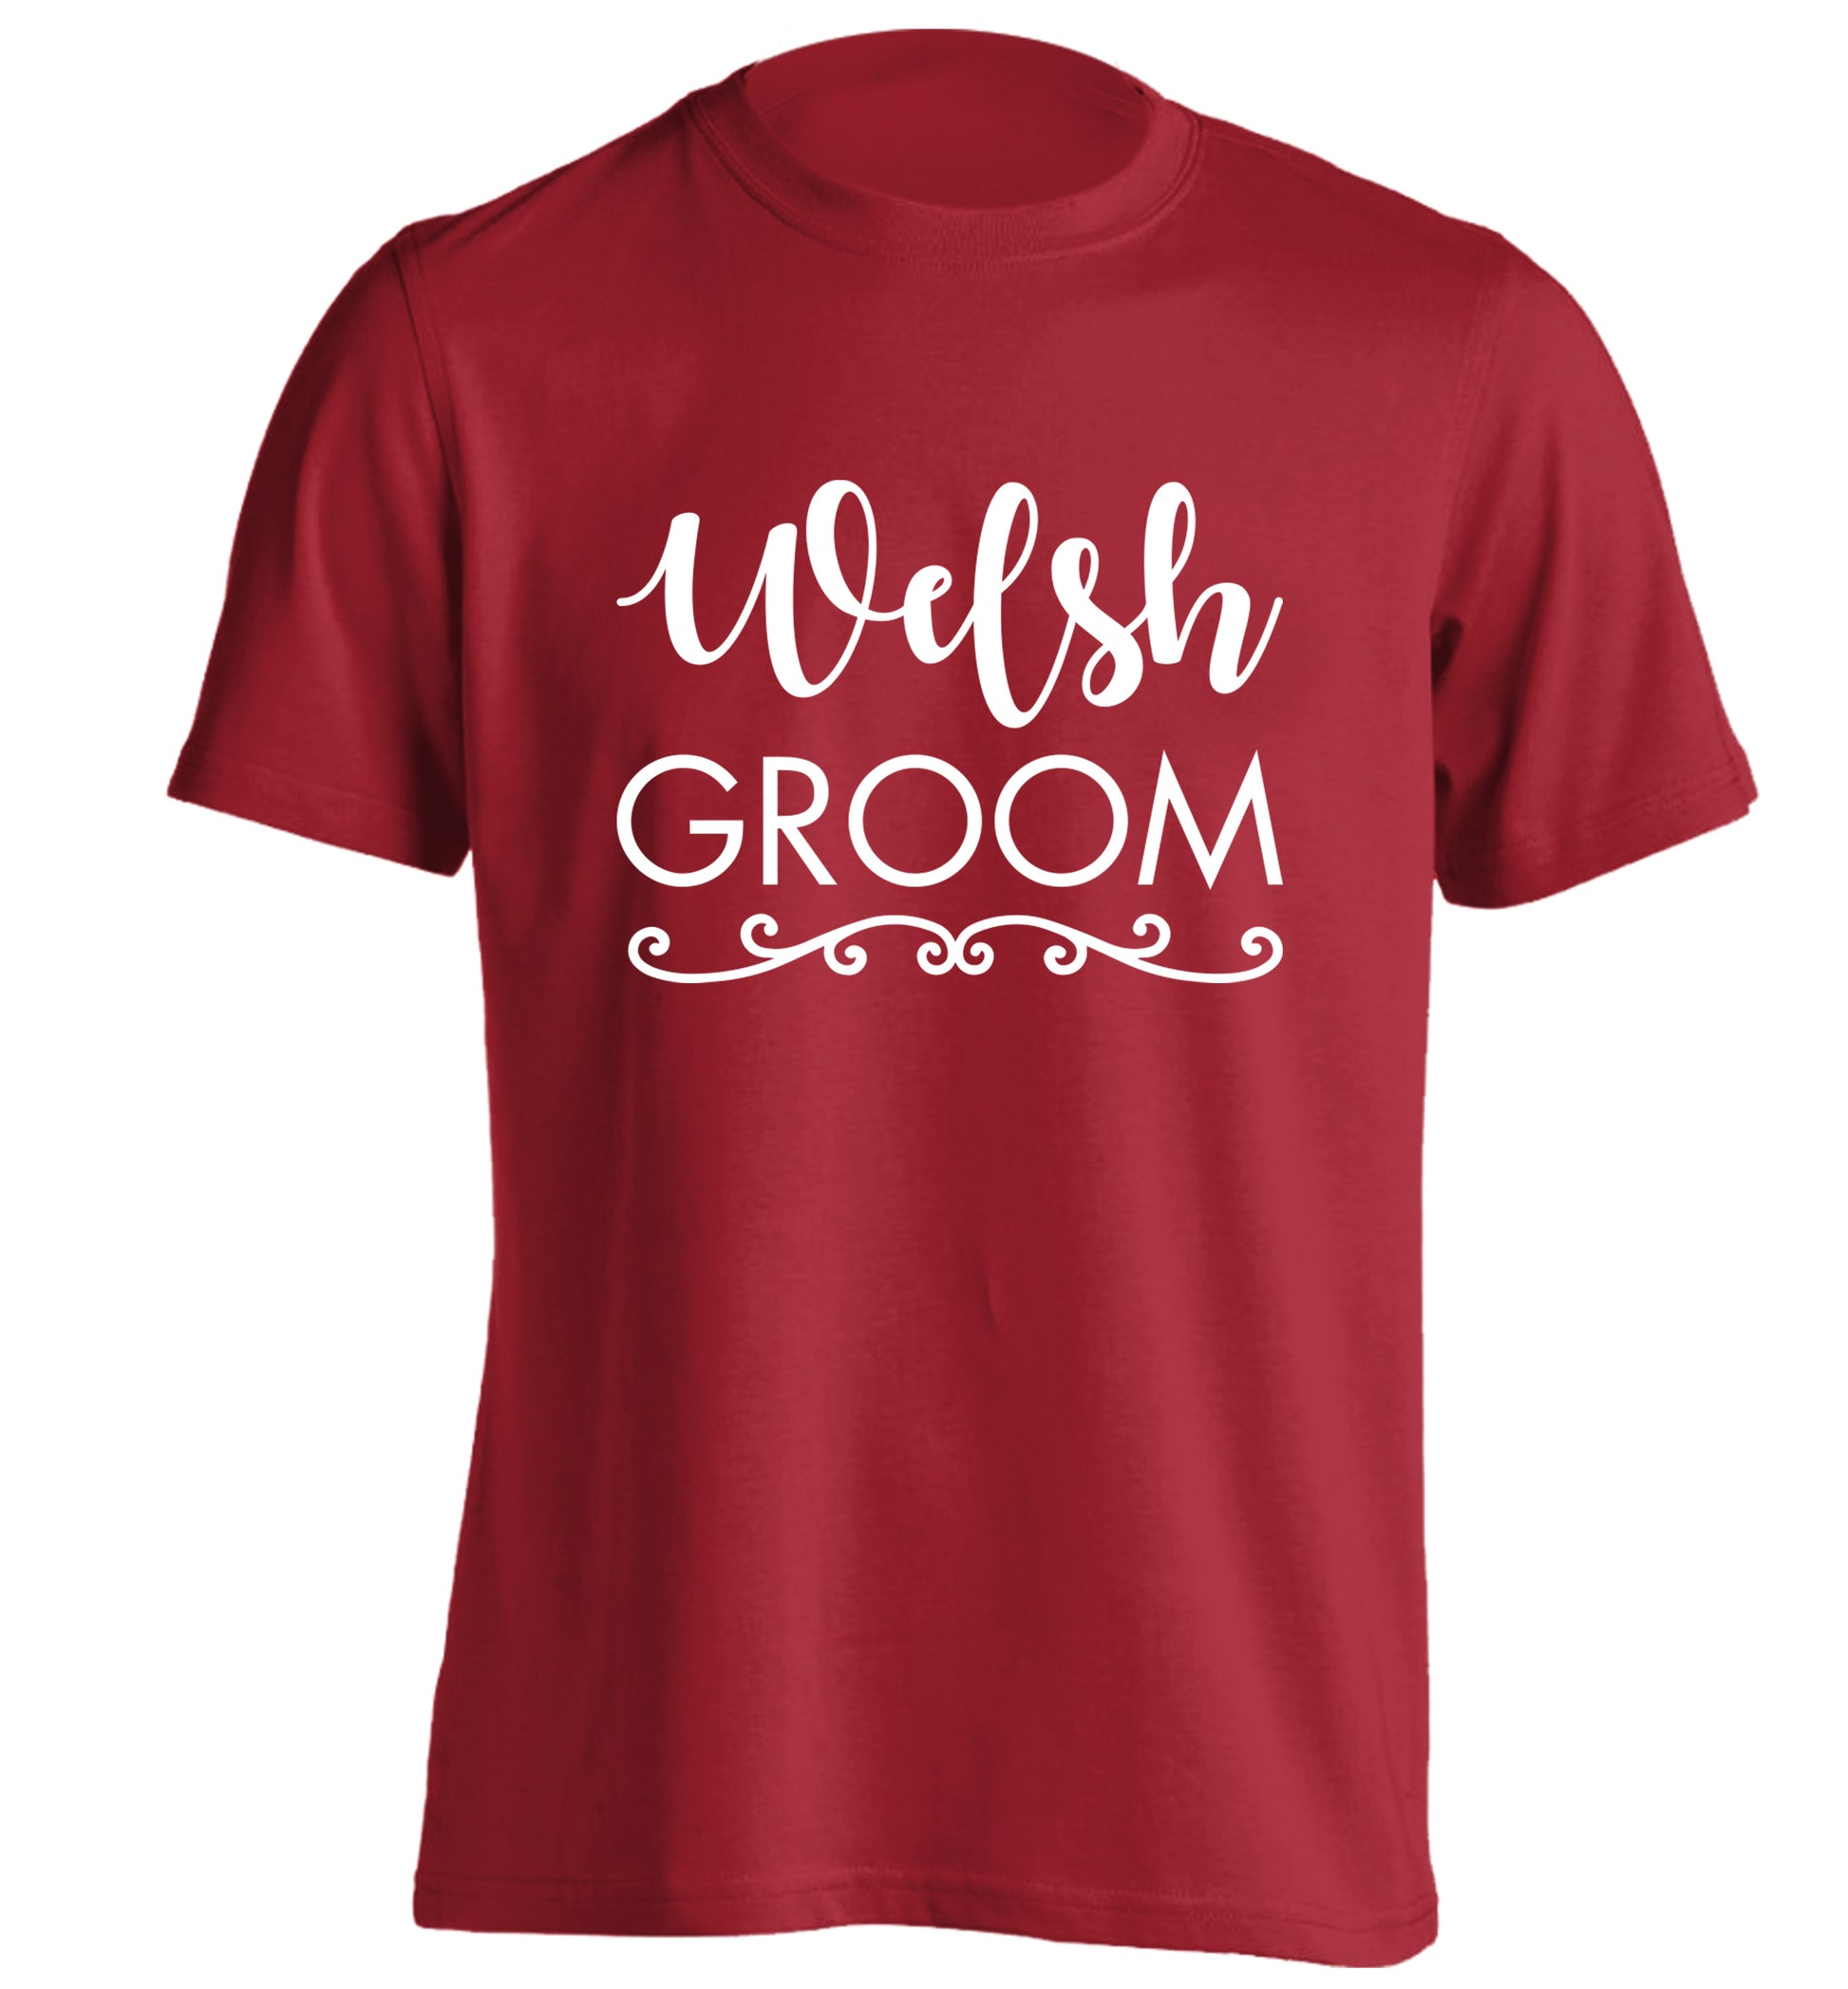 Welsh groom adults unisex red Tshirt 2XL